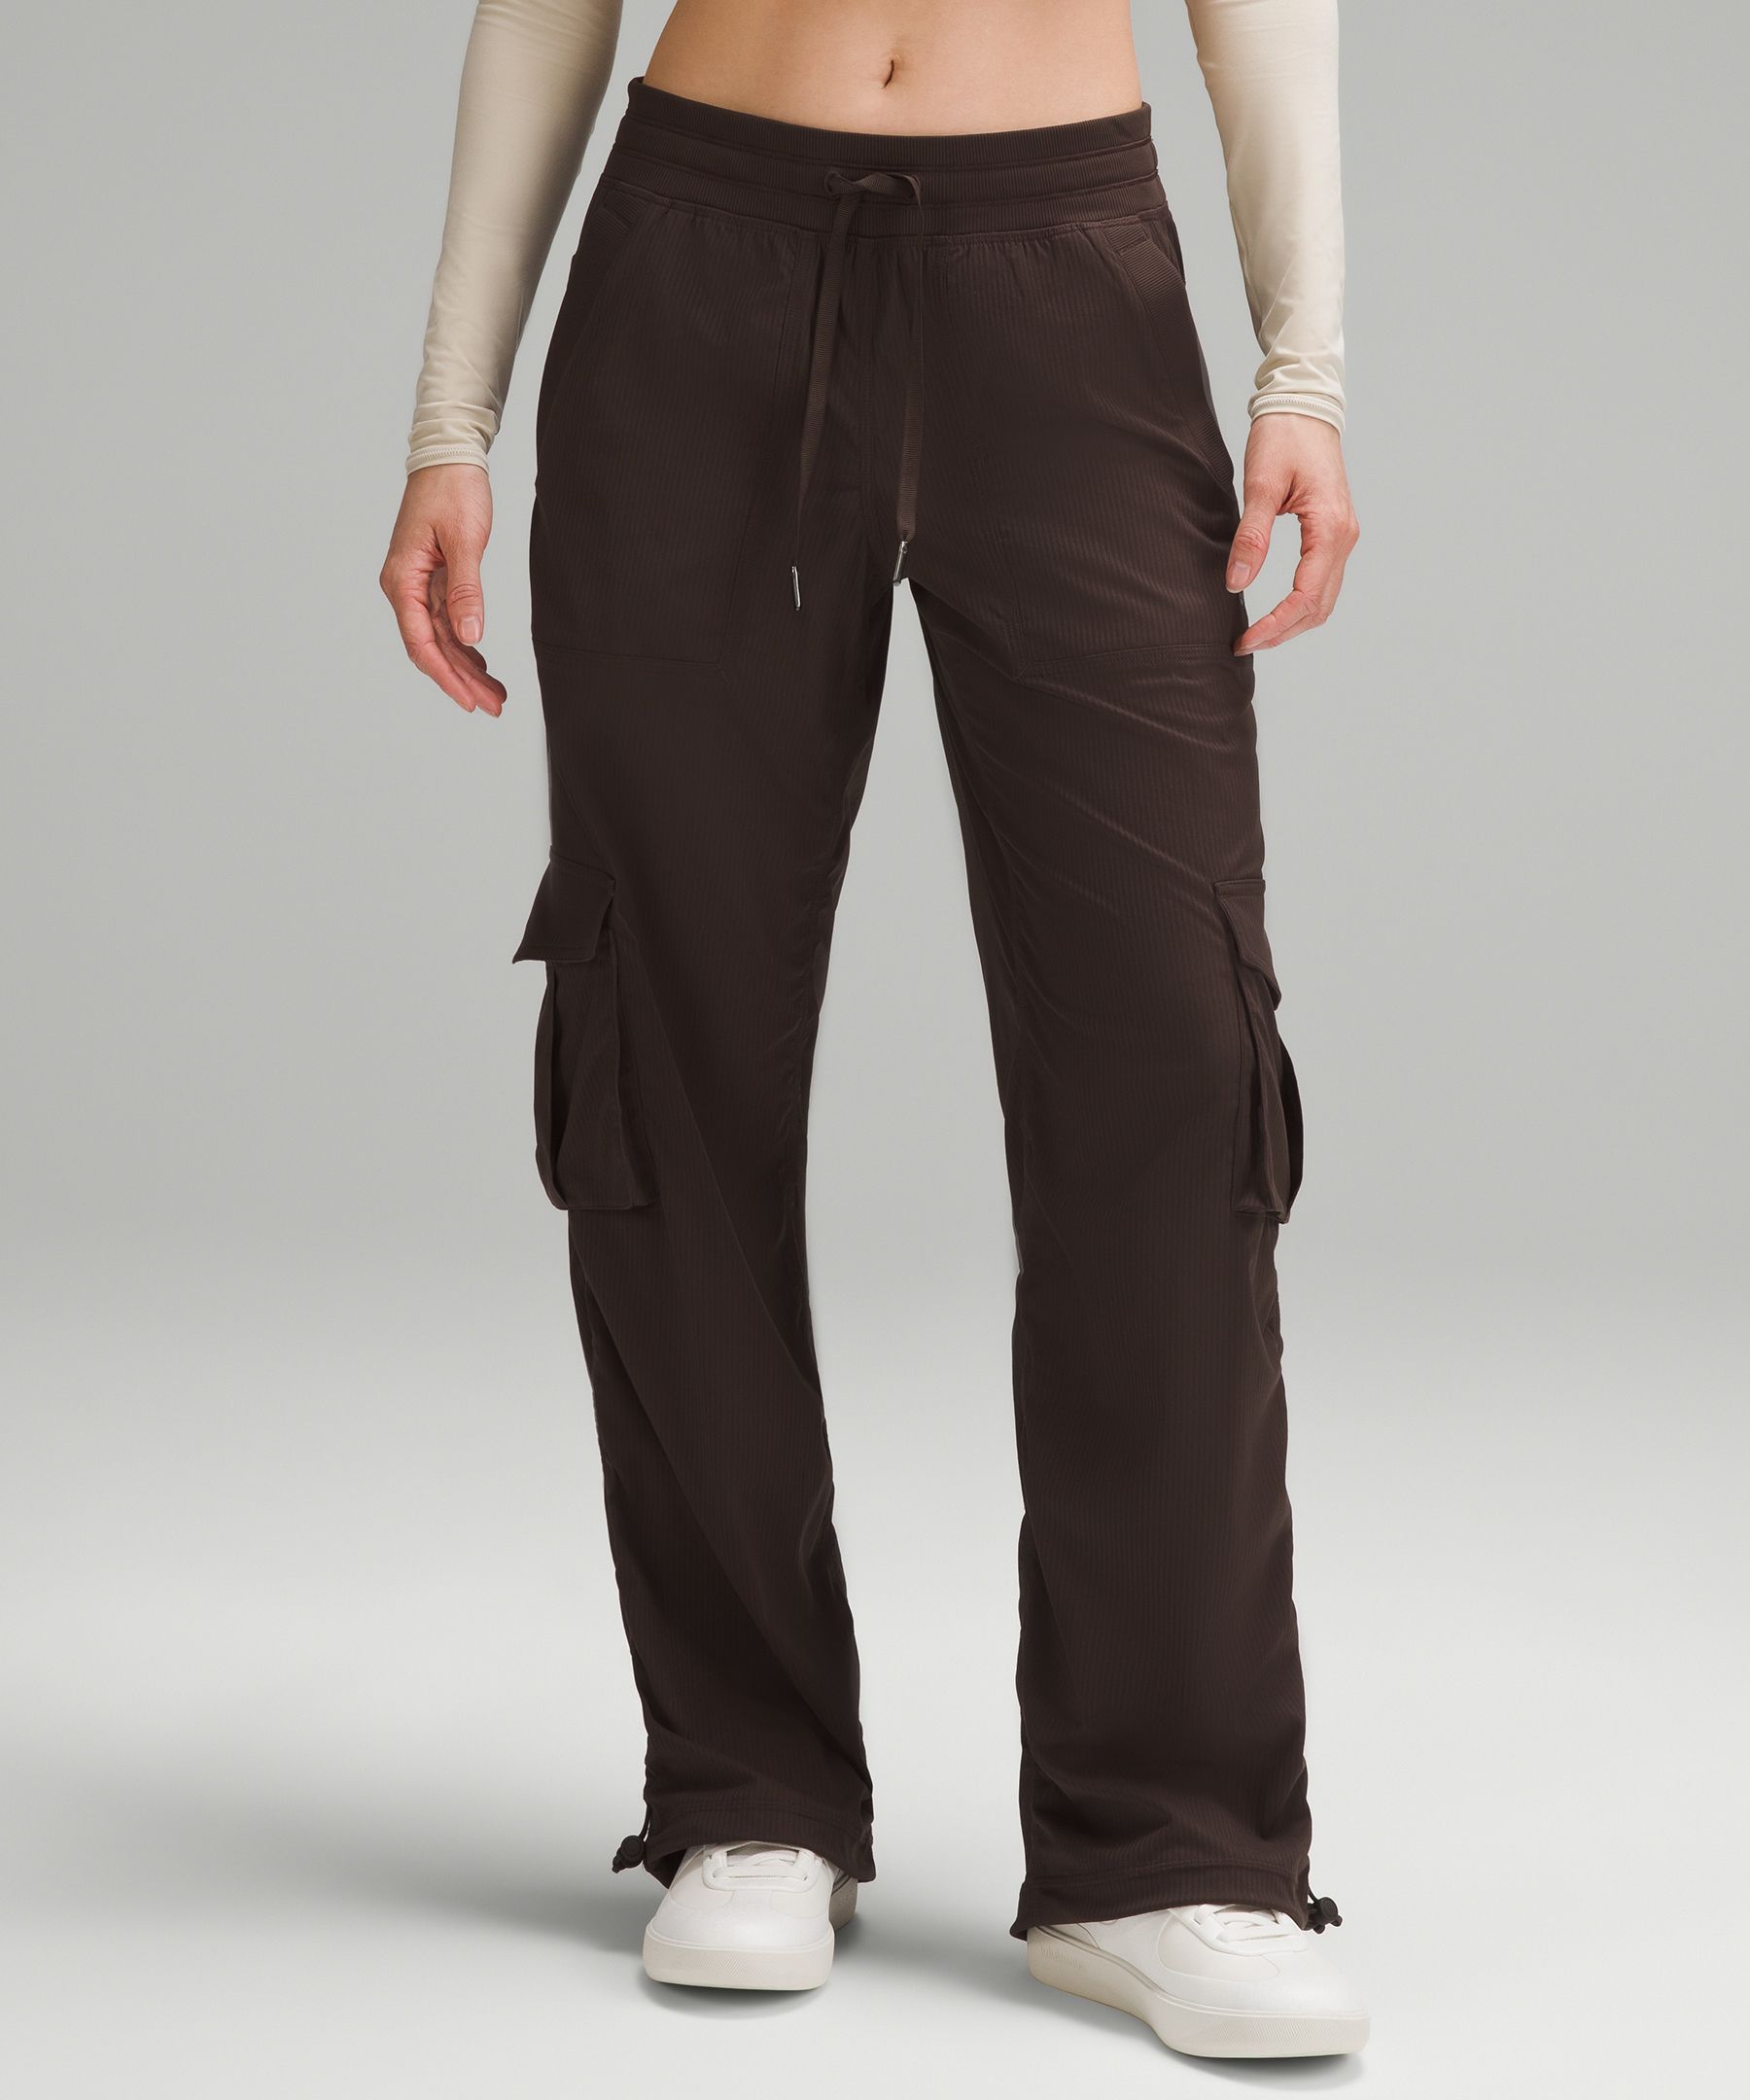 Zumba Fitness Women's Soft-N-Stretch Cargo Pants  